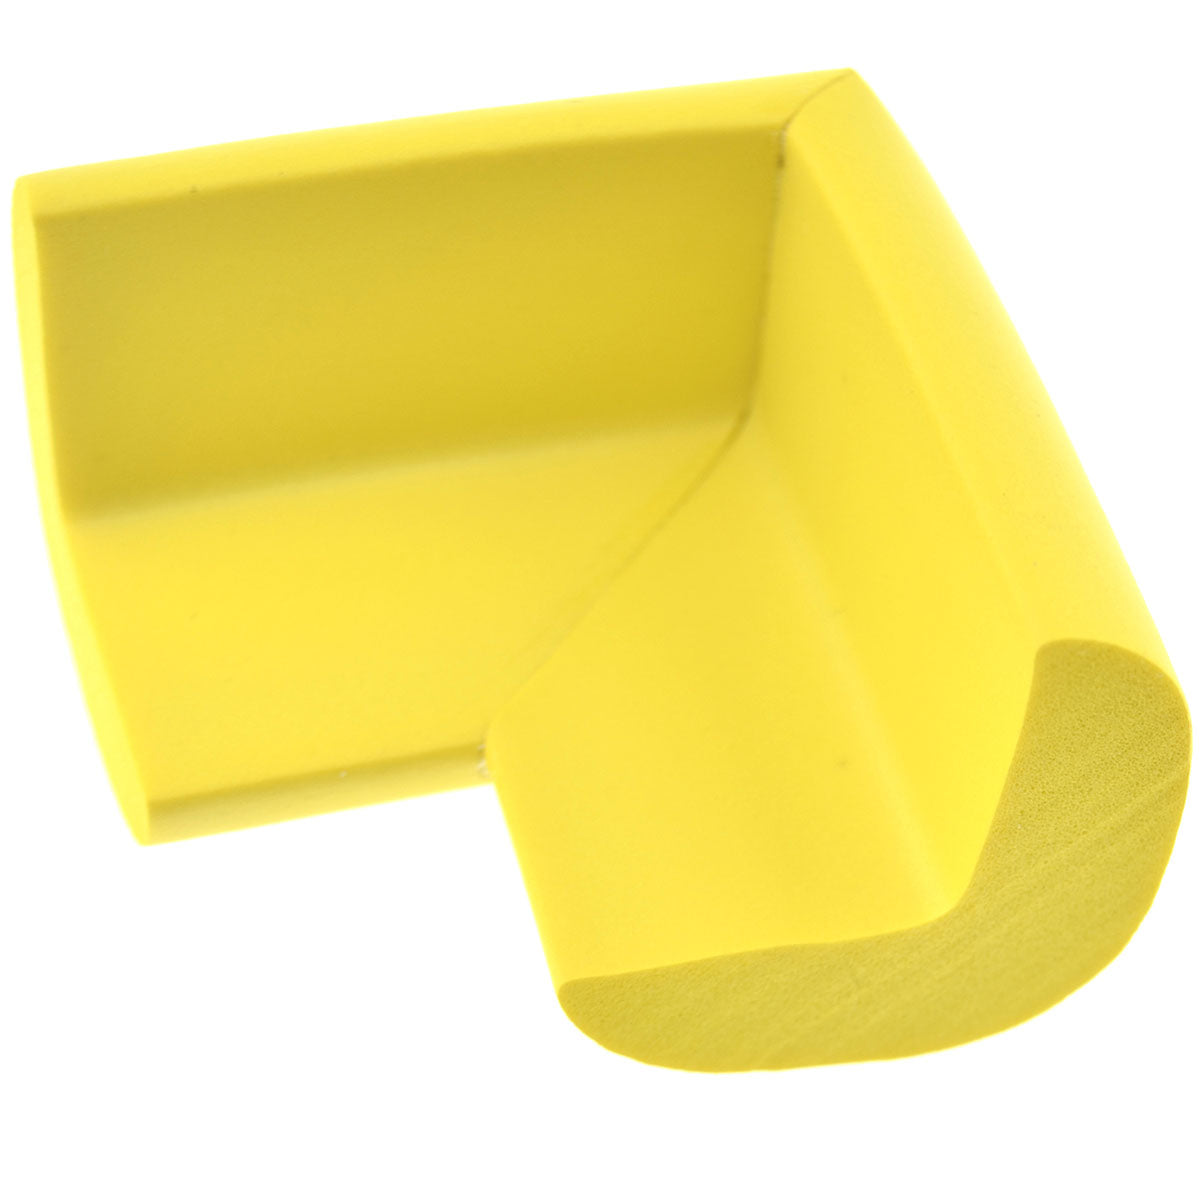 12 Pieces Yellow Jumbo L-Shaped Foam Corner Protectors